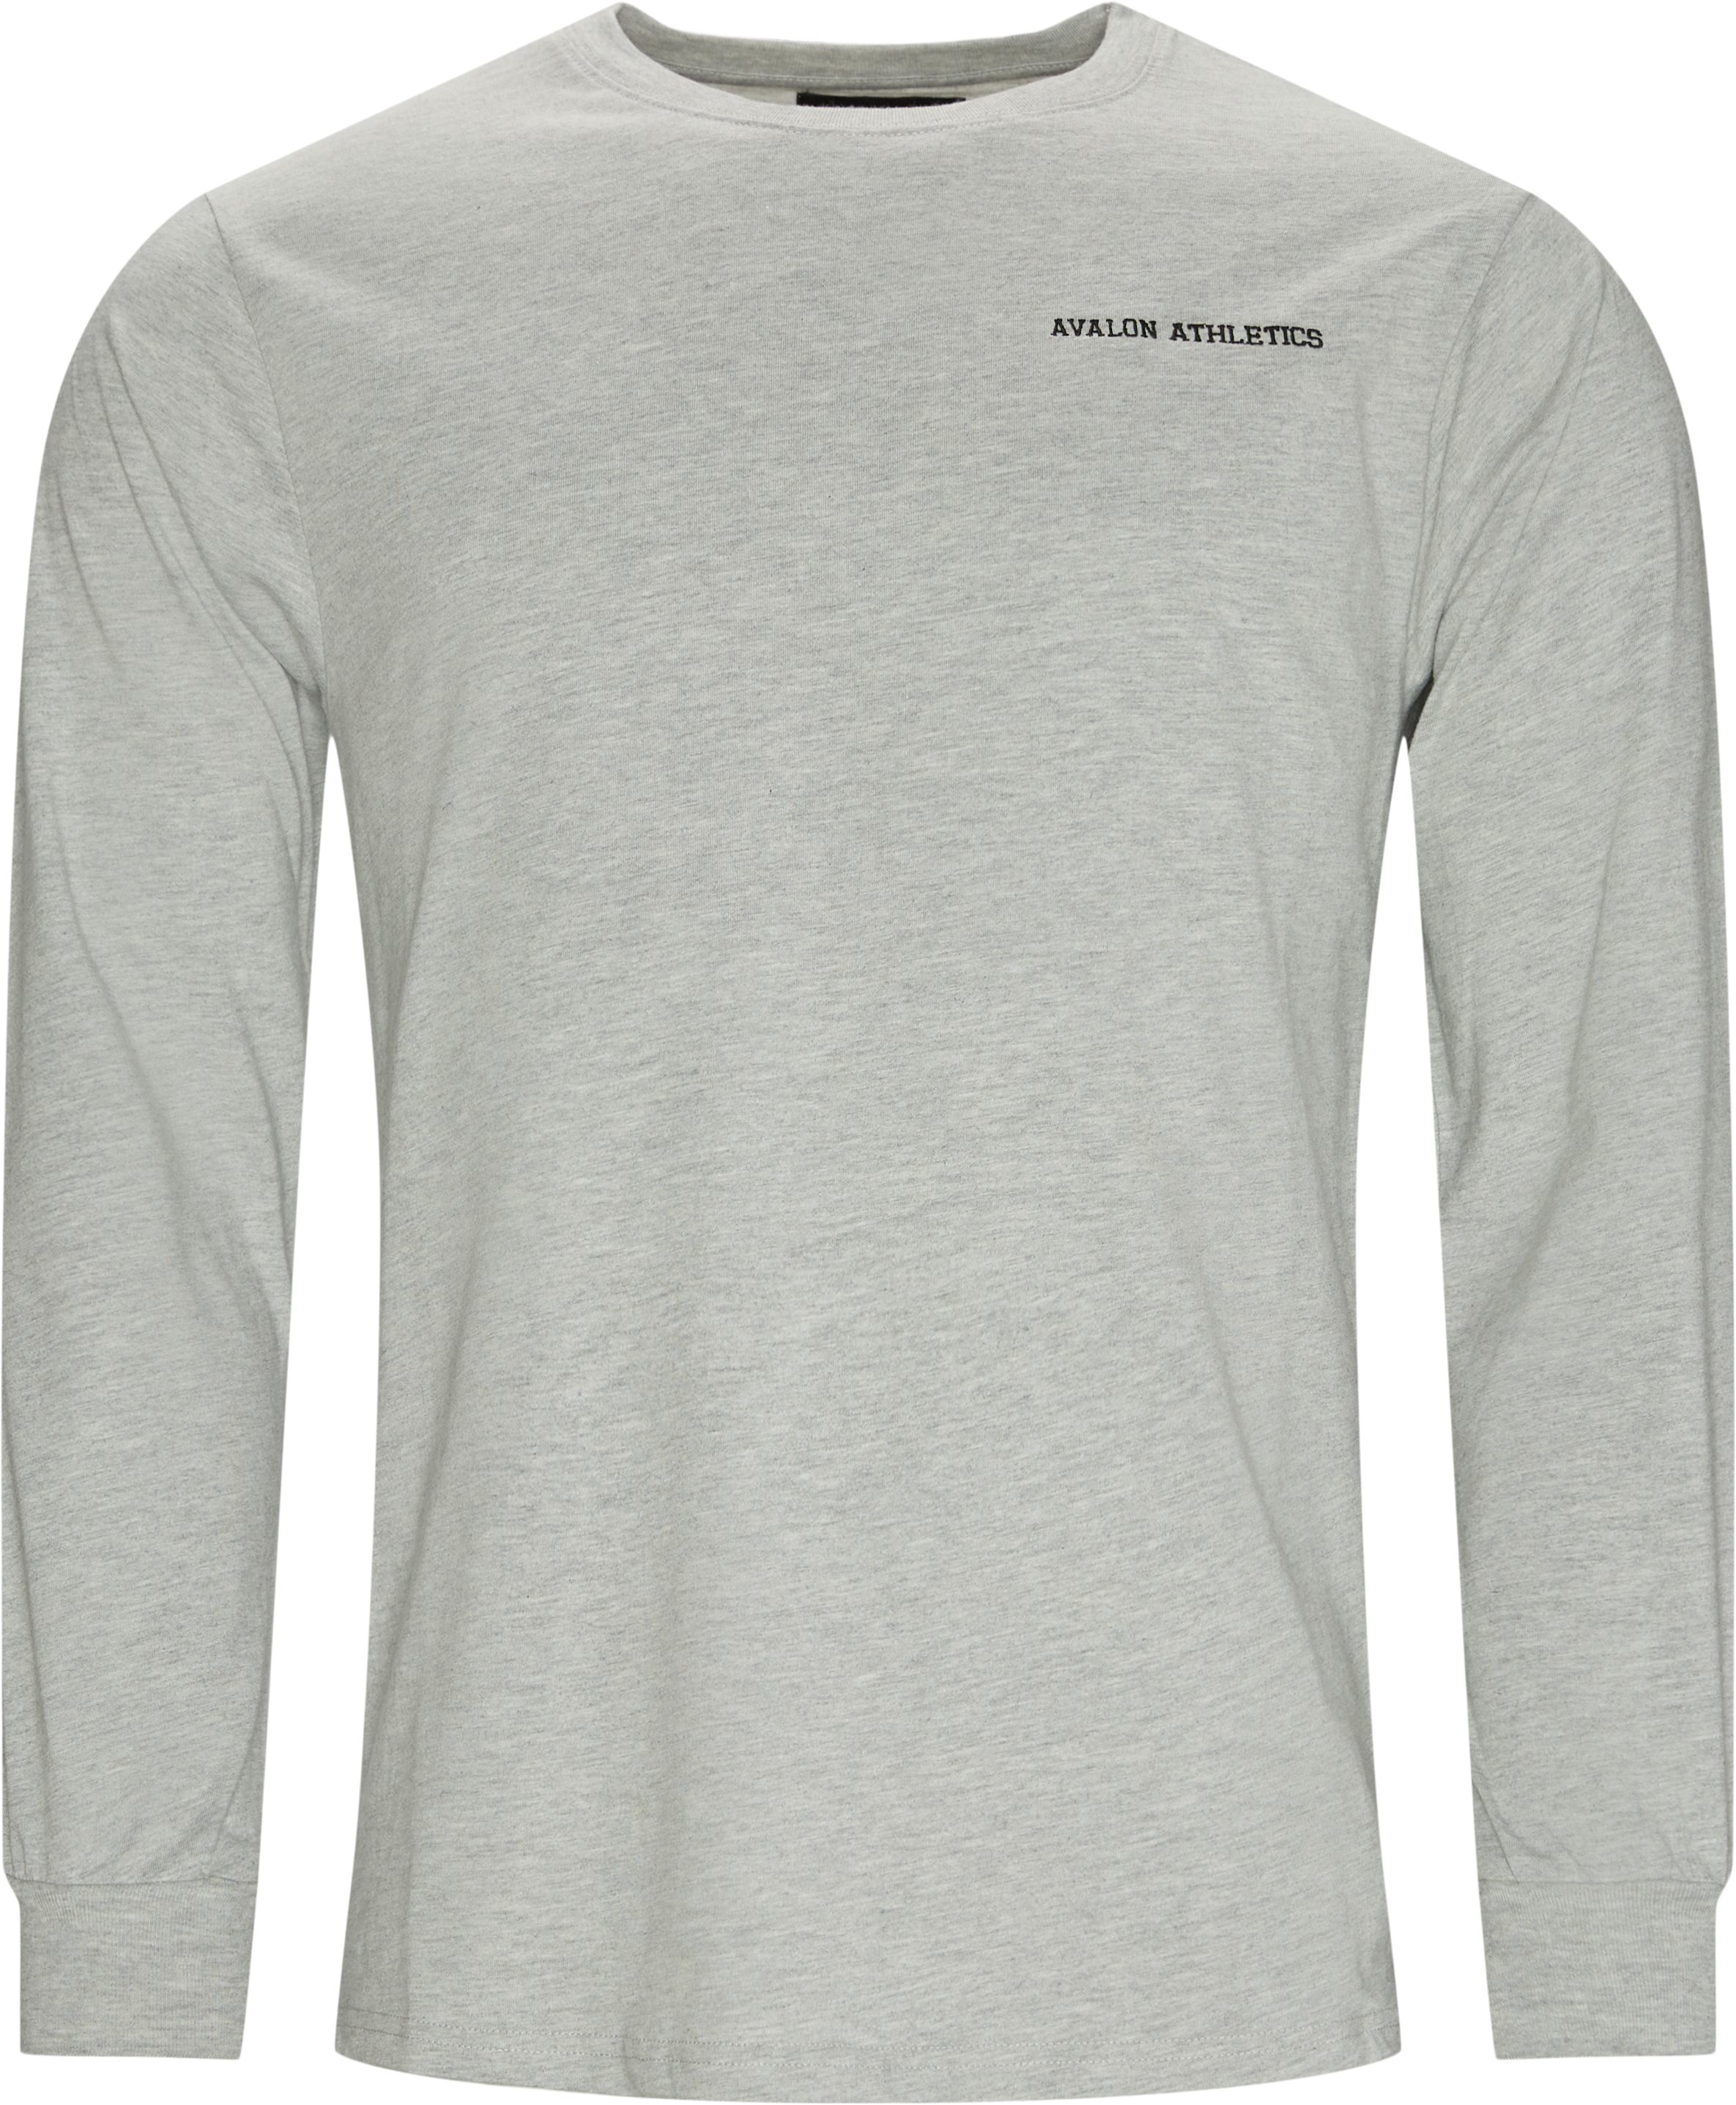 JEROMY Long Sleeve Tee - T-shirts - Regular fit - Grey